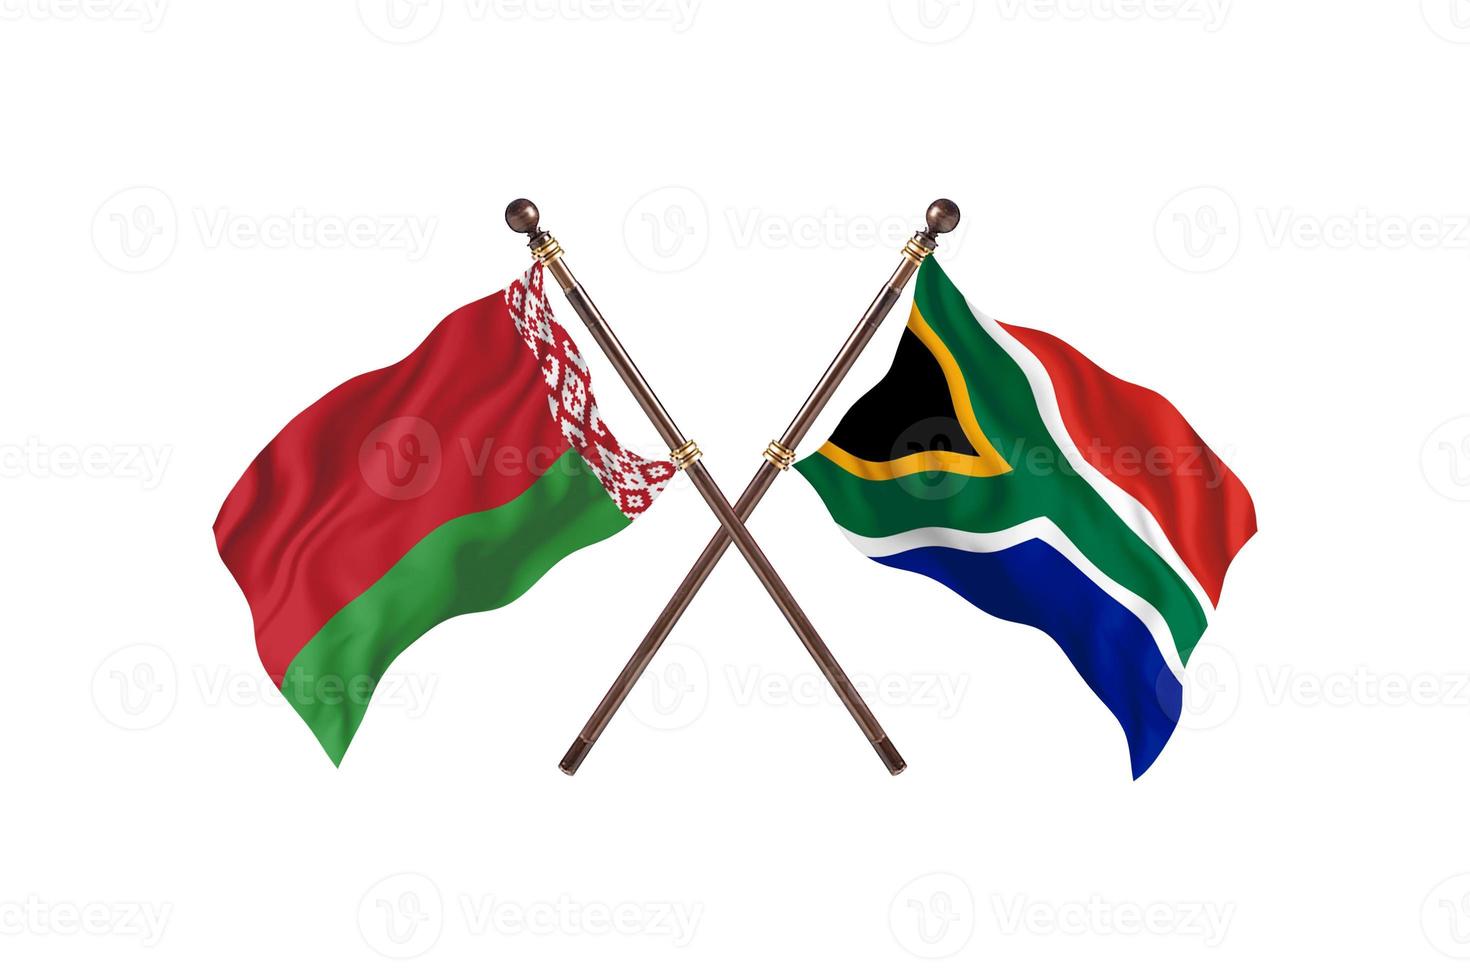 Wit-Rusland versus zuiden Afrika twee land vlaggen foto